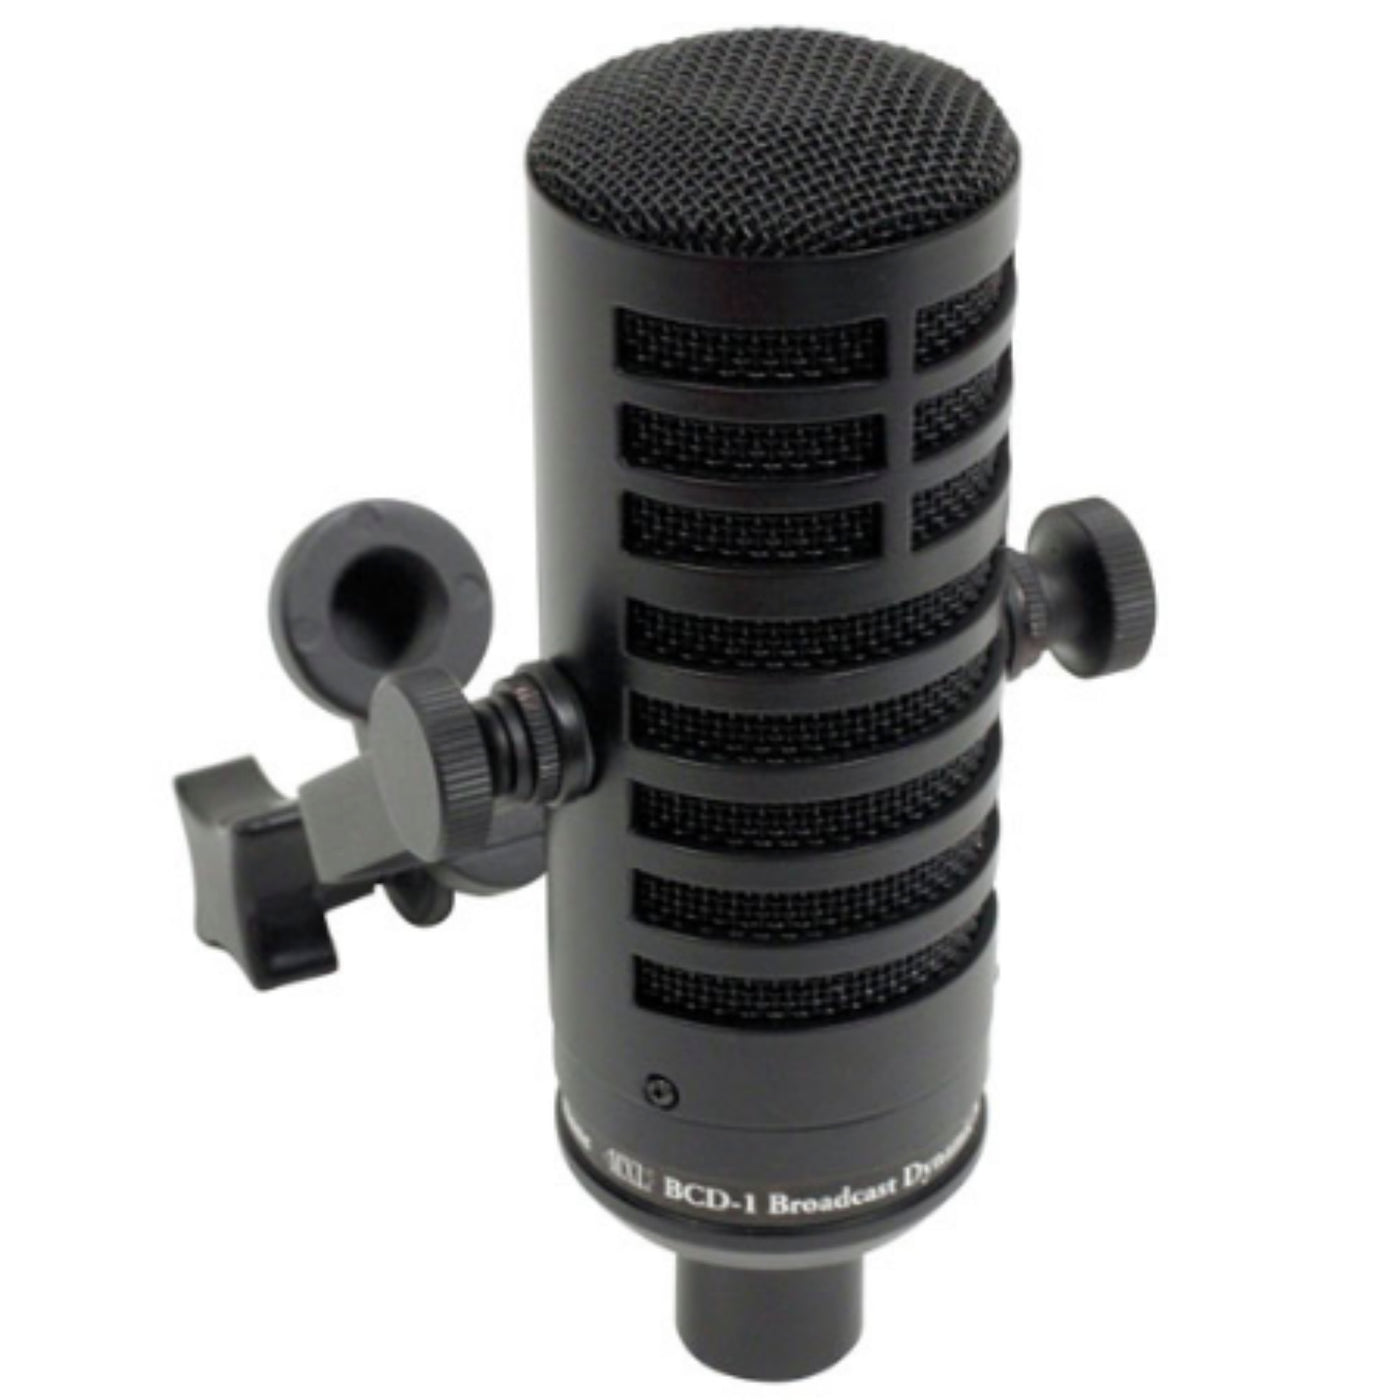 MXL-BCD-1 Podcast Dynamic Microphone